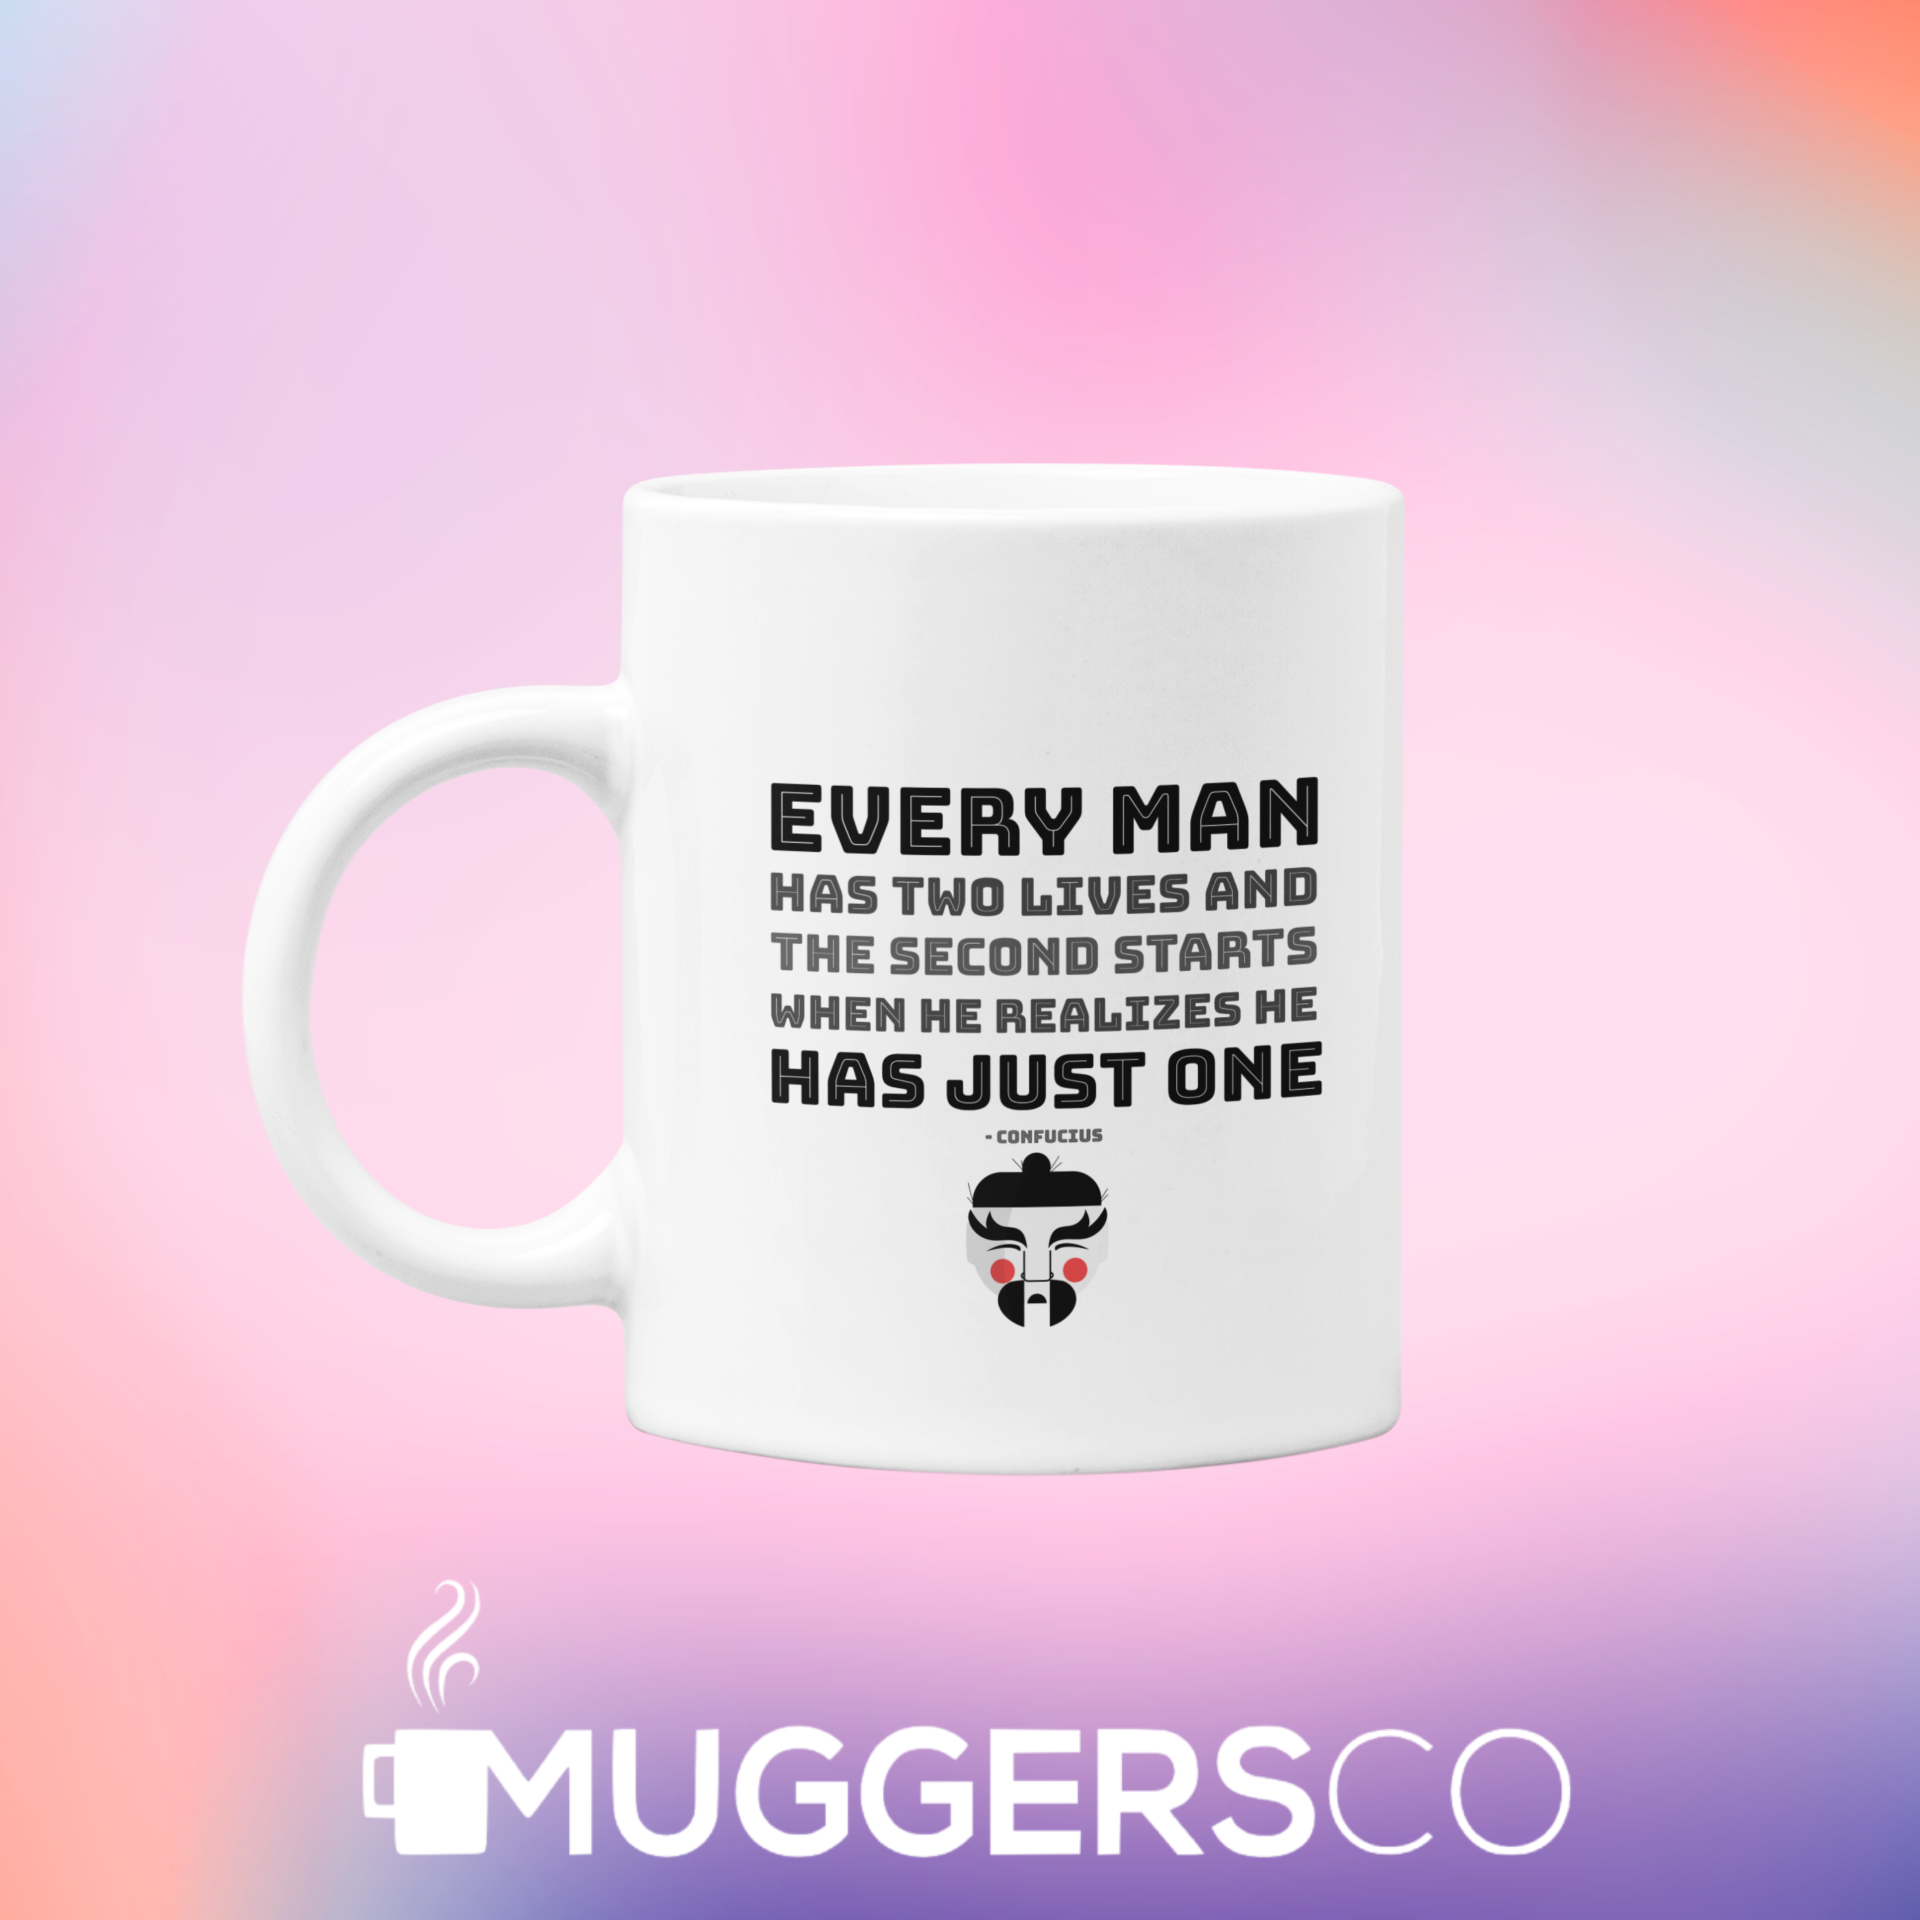 Confucius quote white coffee mug